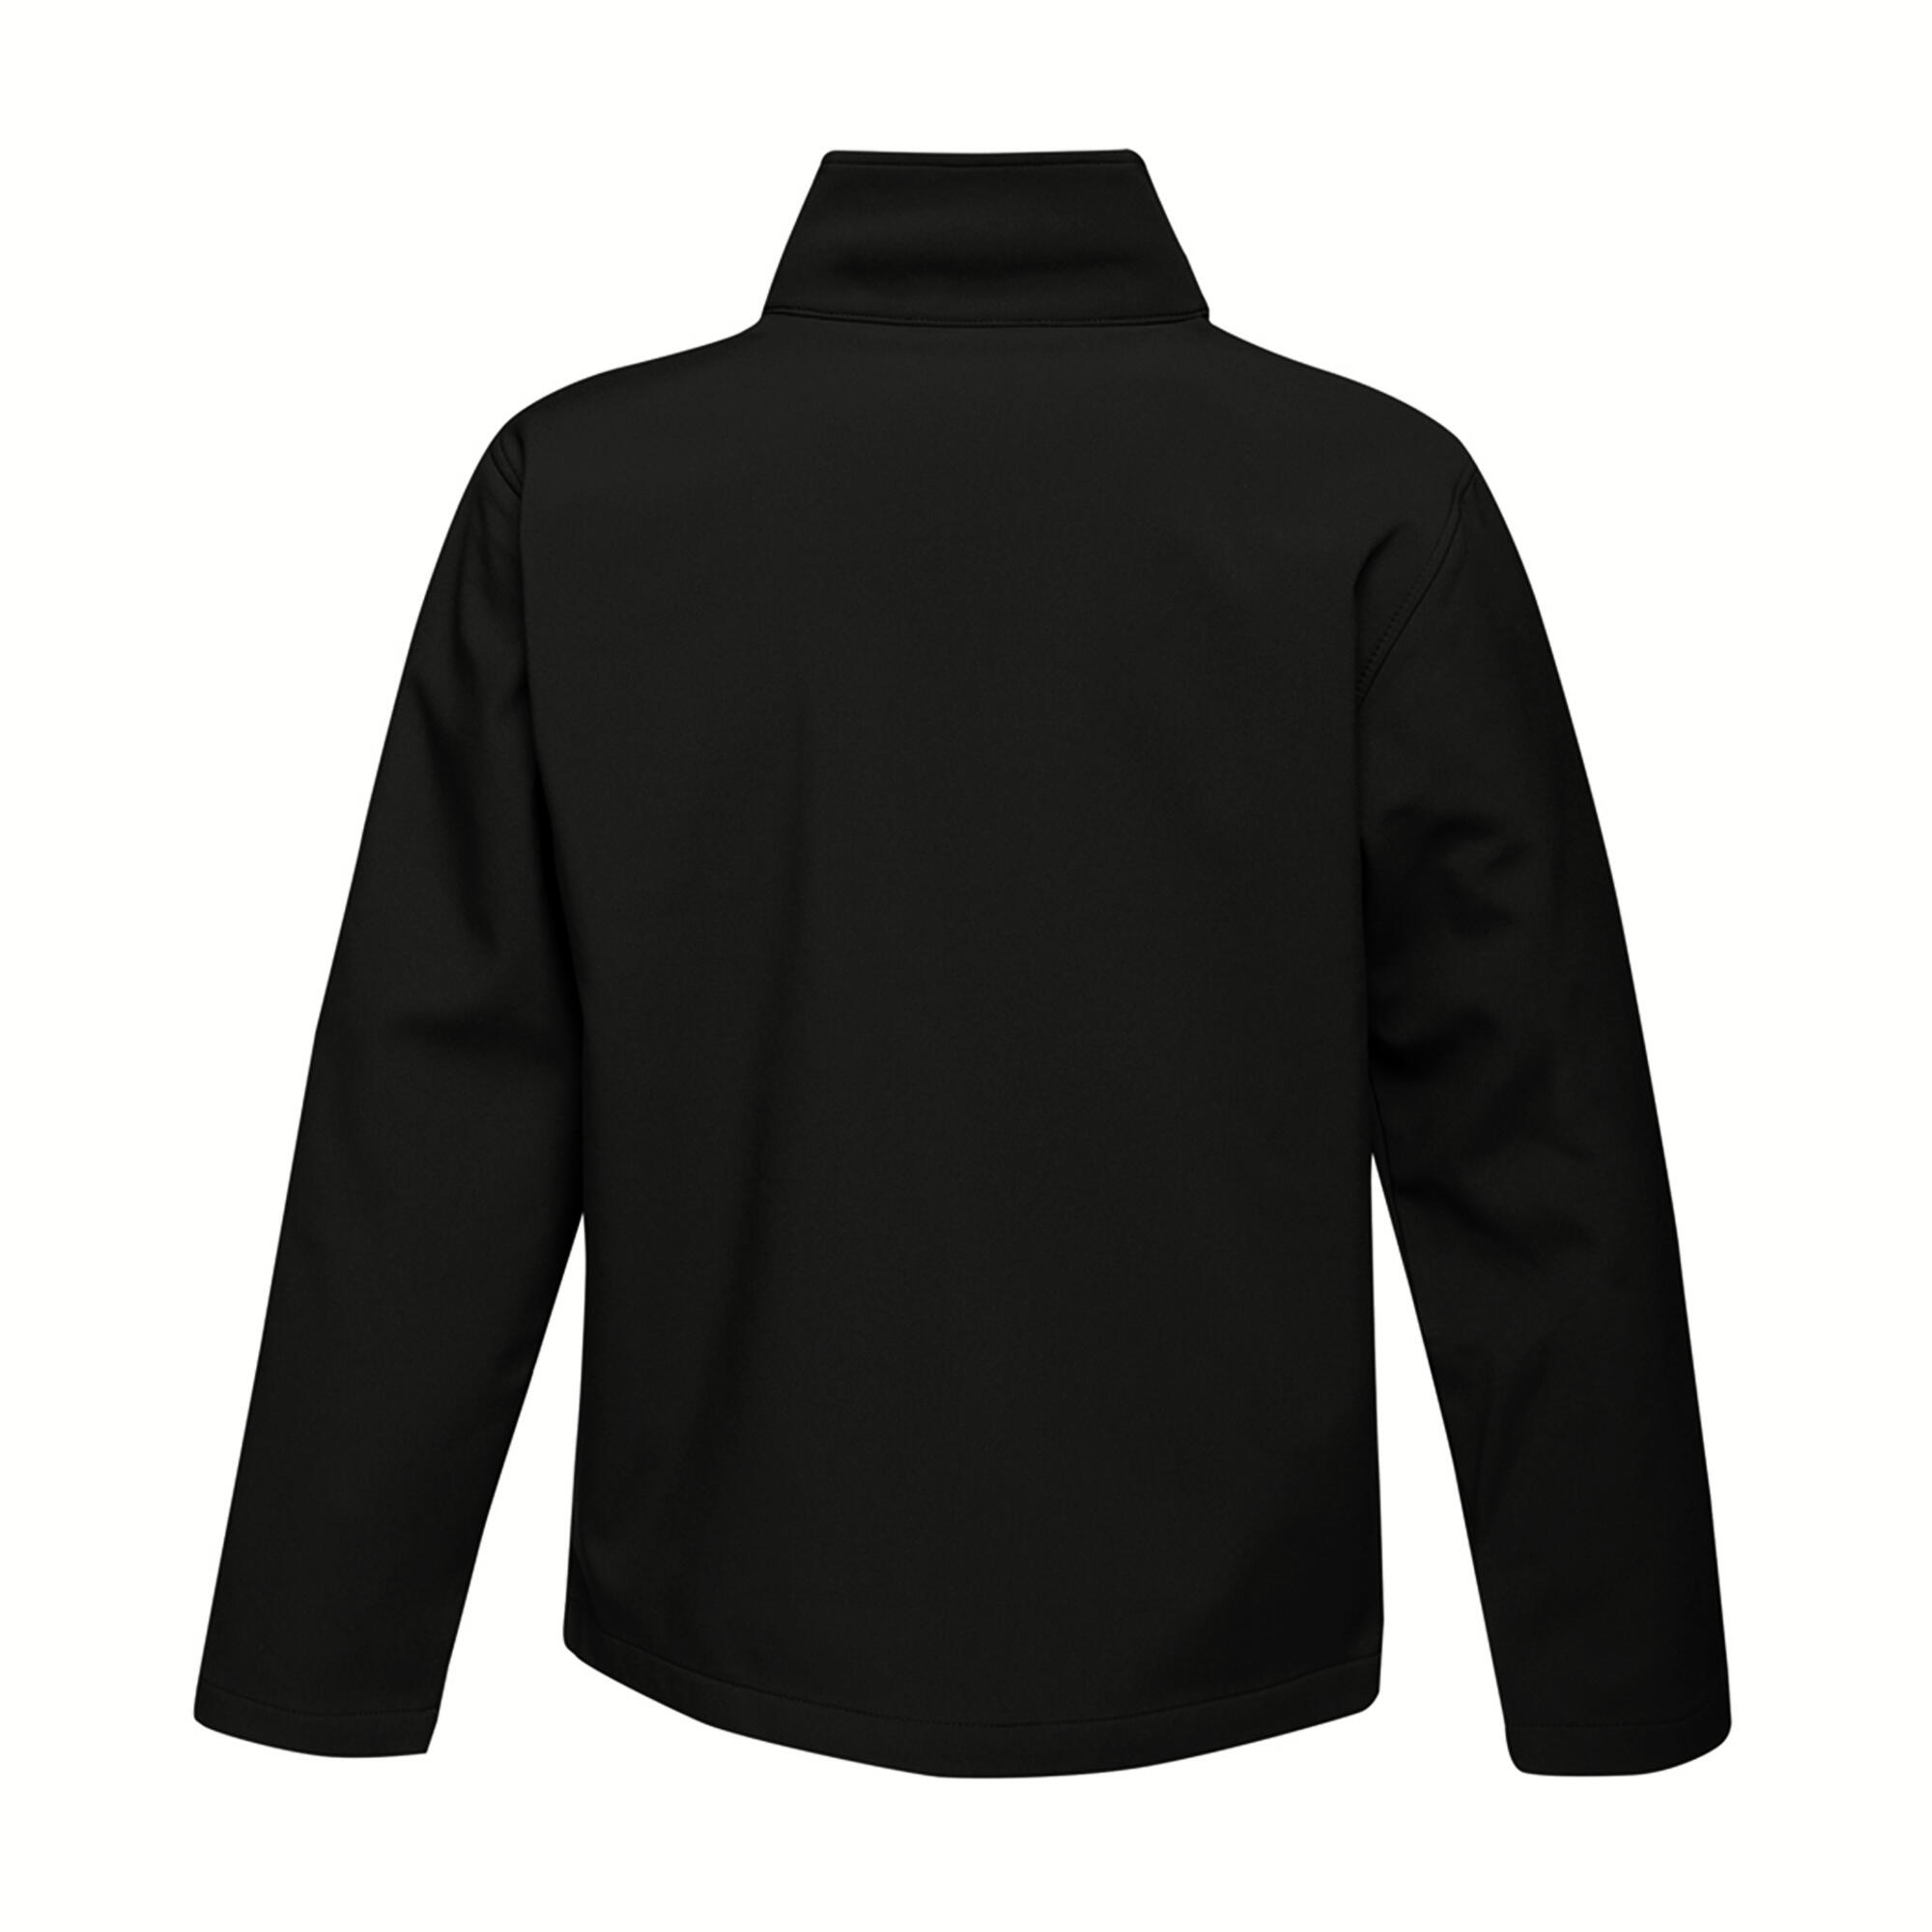 Standout Mens Ablaze Printable Soft Shell Jacket (Black/Black) 2/4